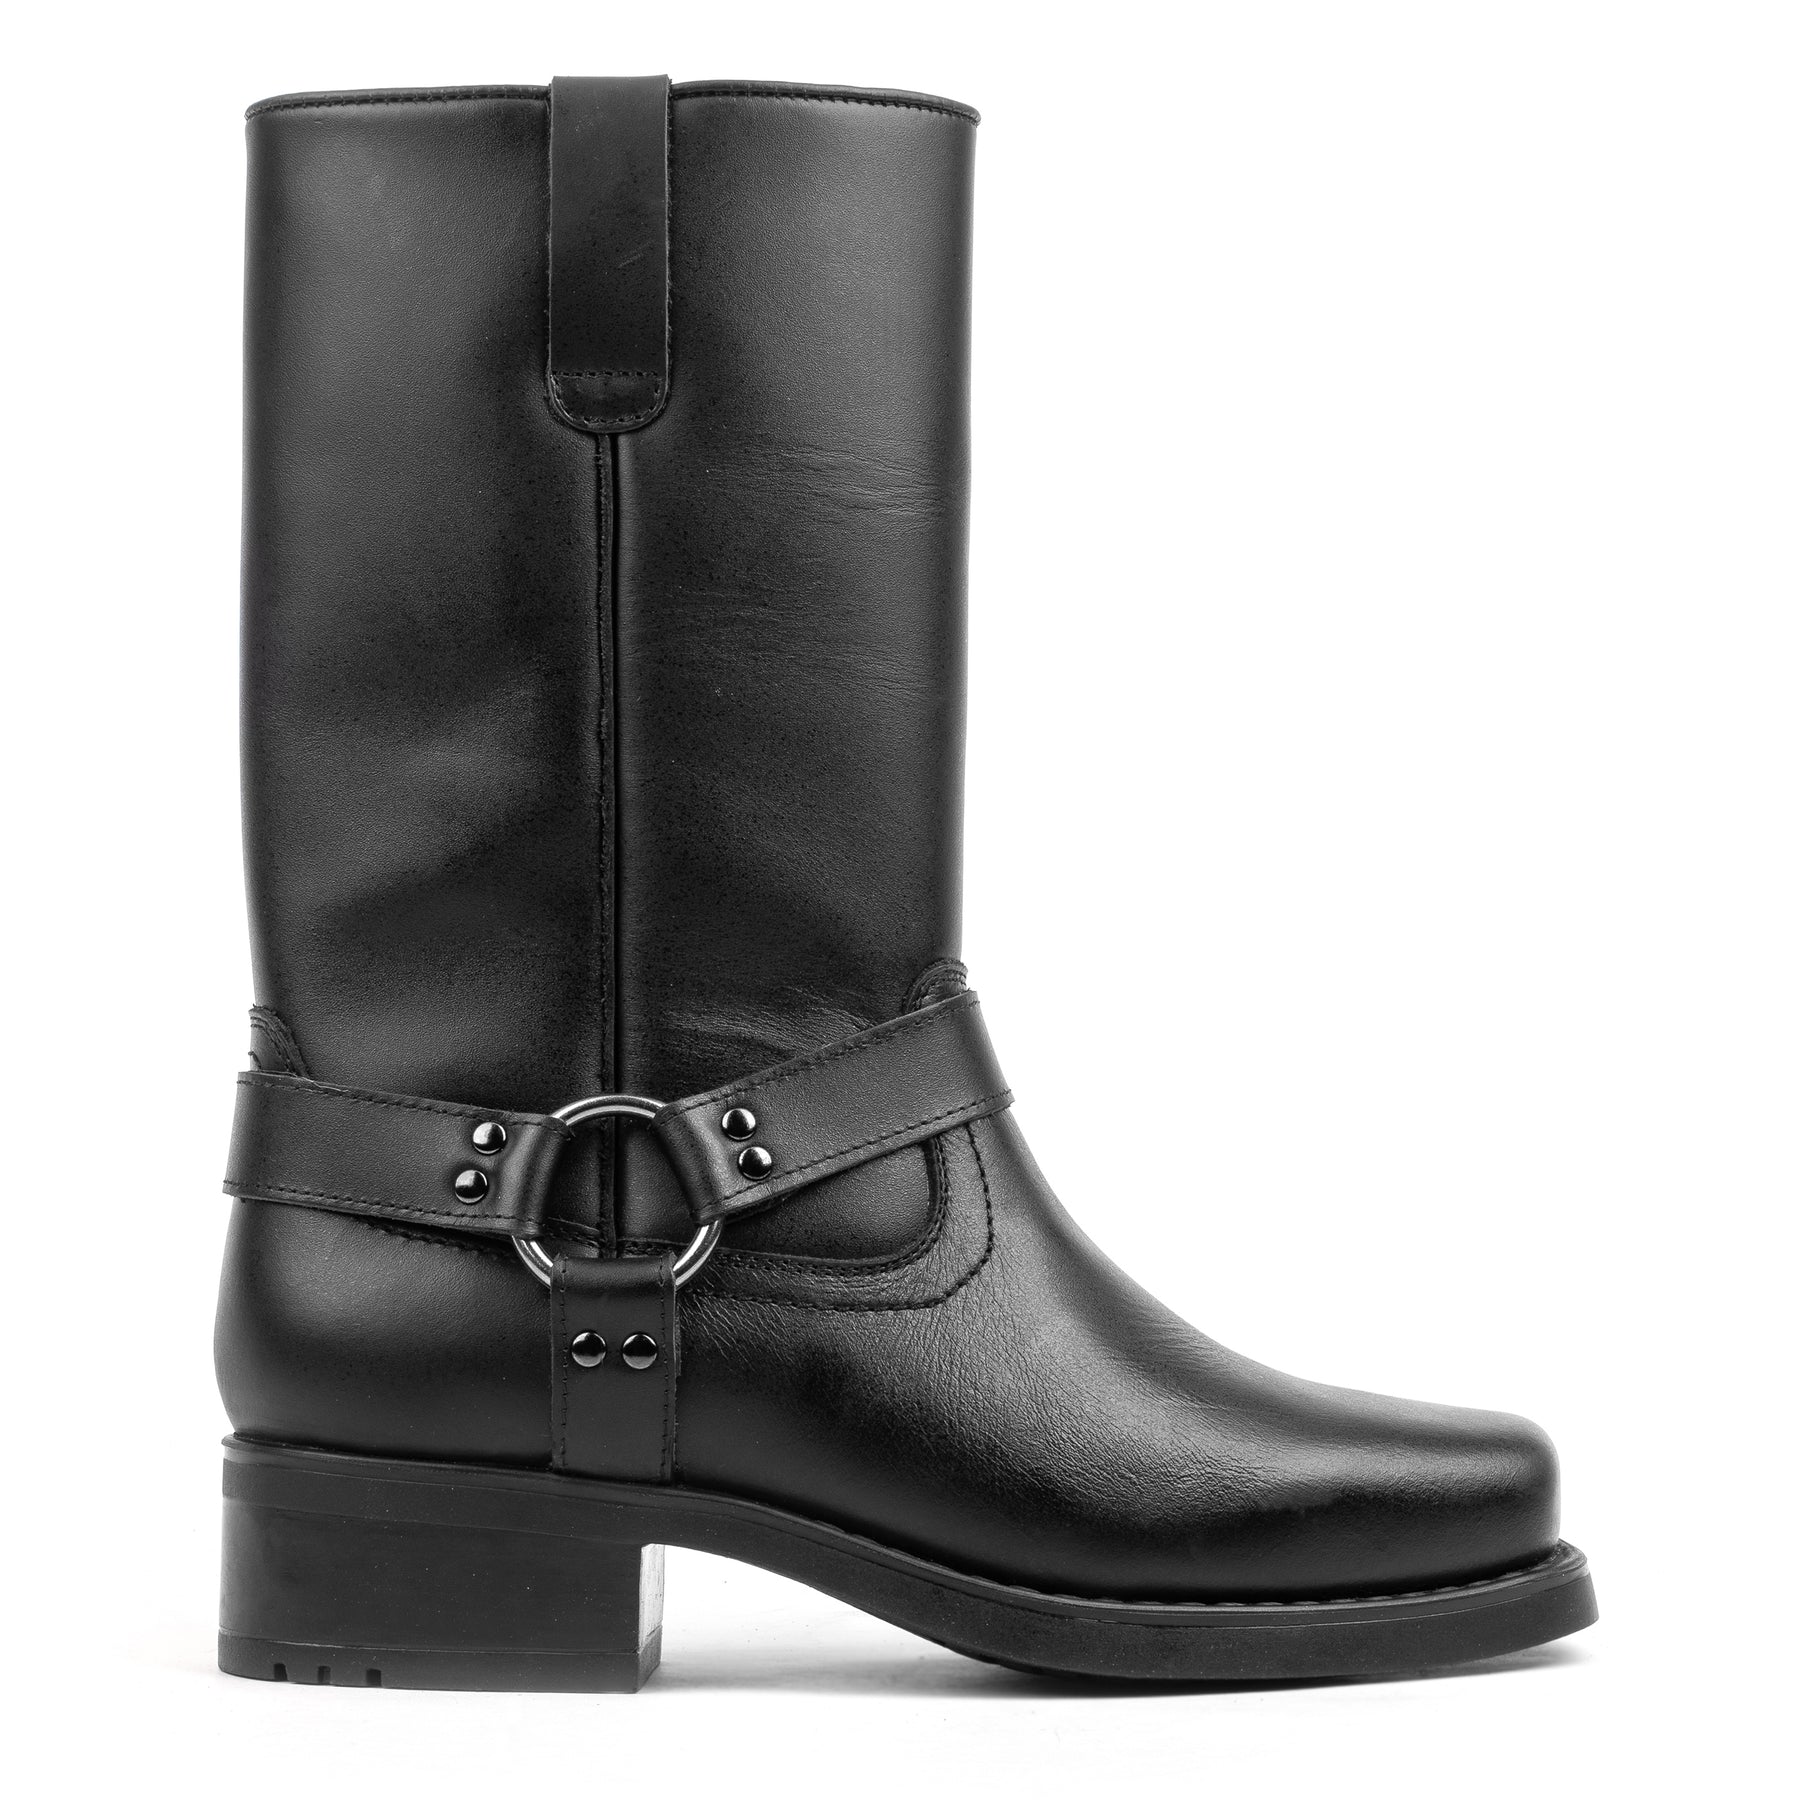 NORDLAND HARLEY HIGH BOOT Black Leather - HINSON